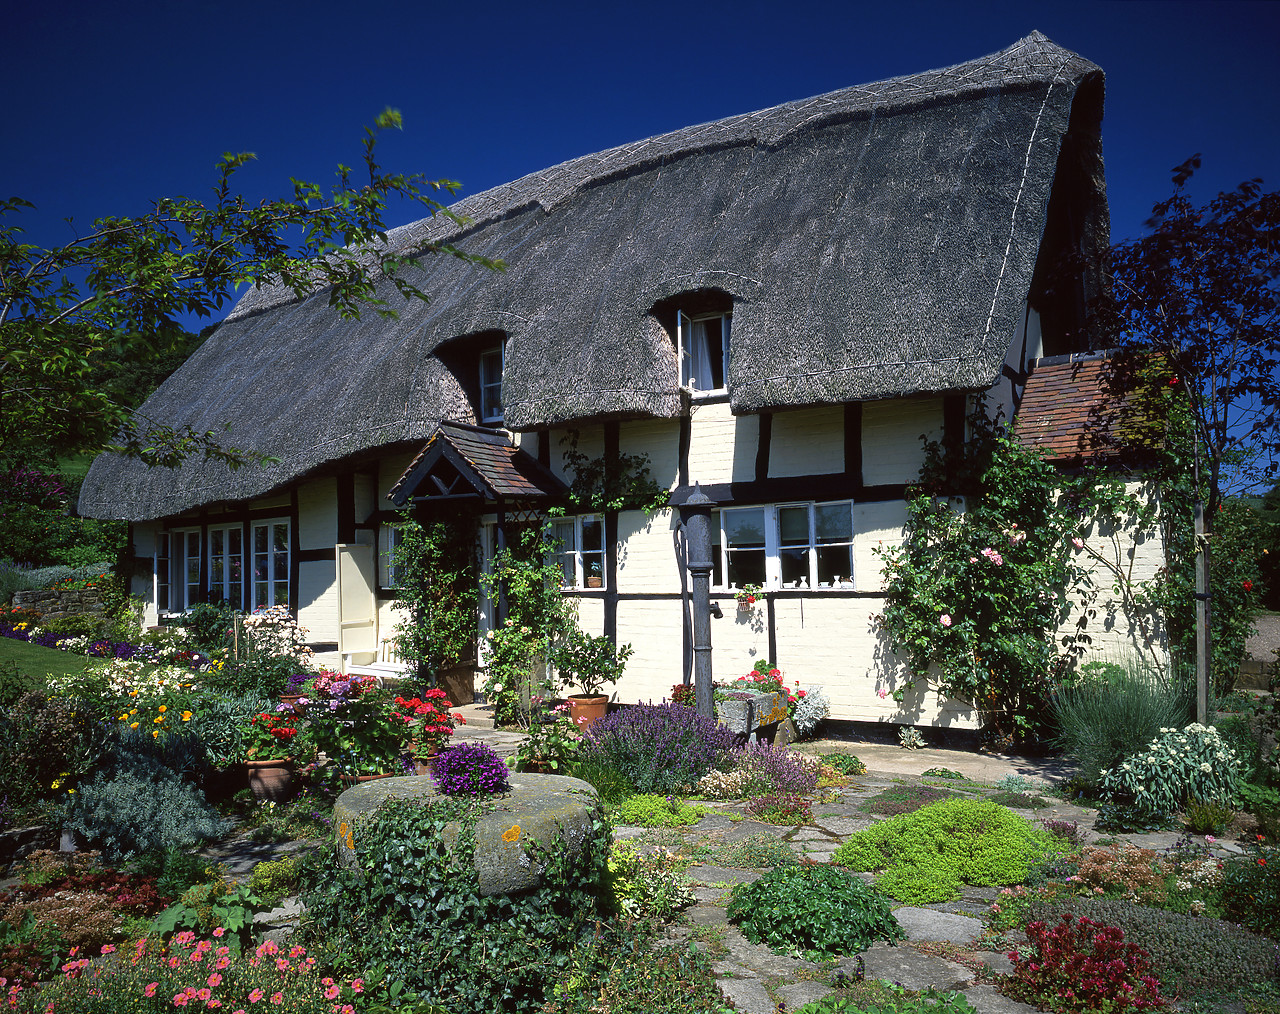 #881516-1 - Thatched Cottage & Garden, Eastnor, Herefordshire, England